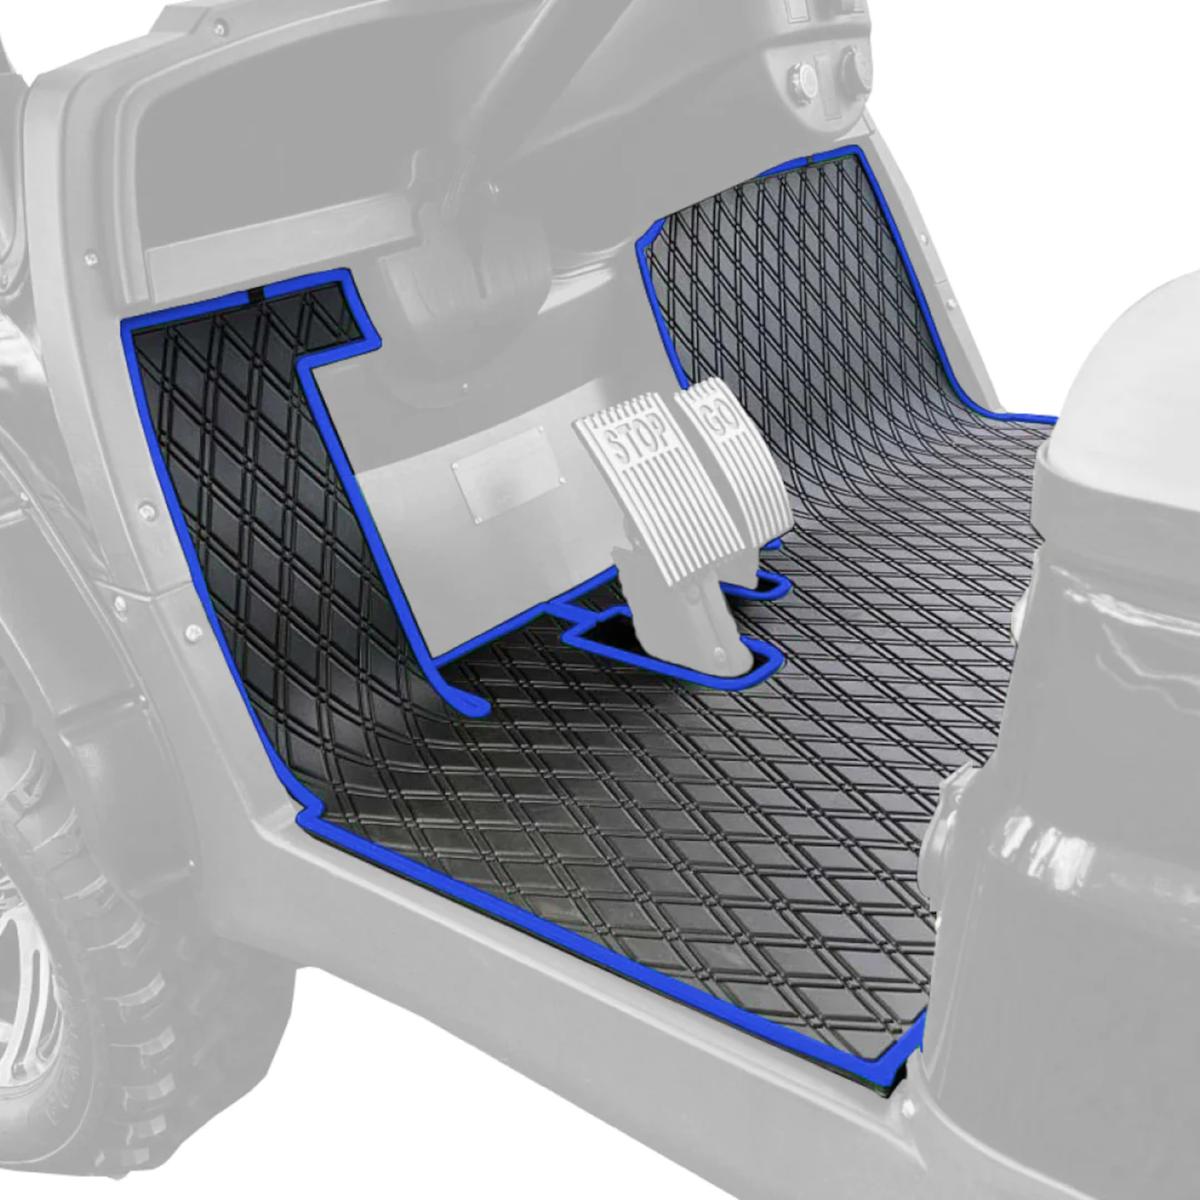 Xtreme Floor Mats for ICON / Advanced EV1 - Black/Blue